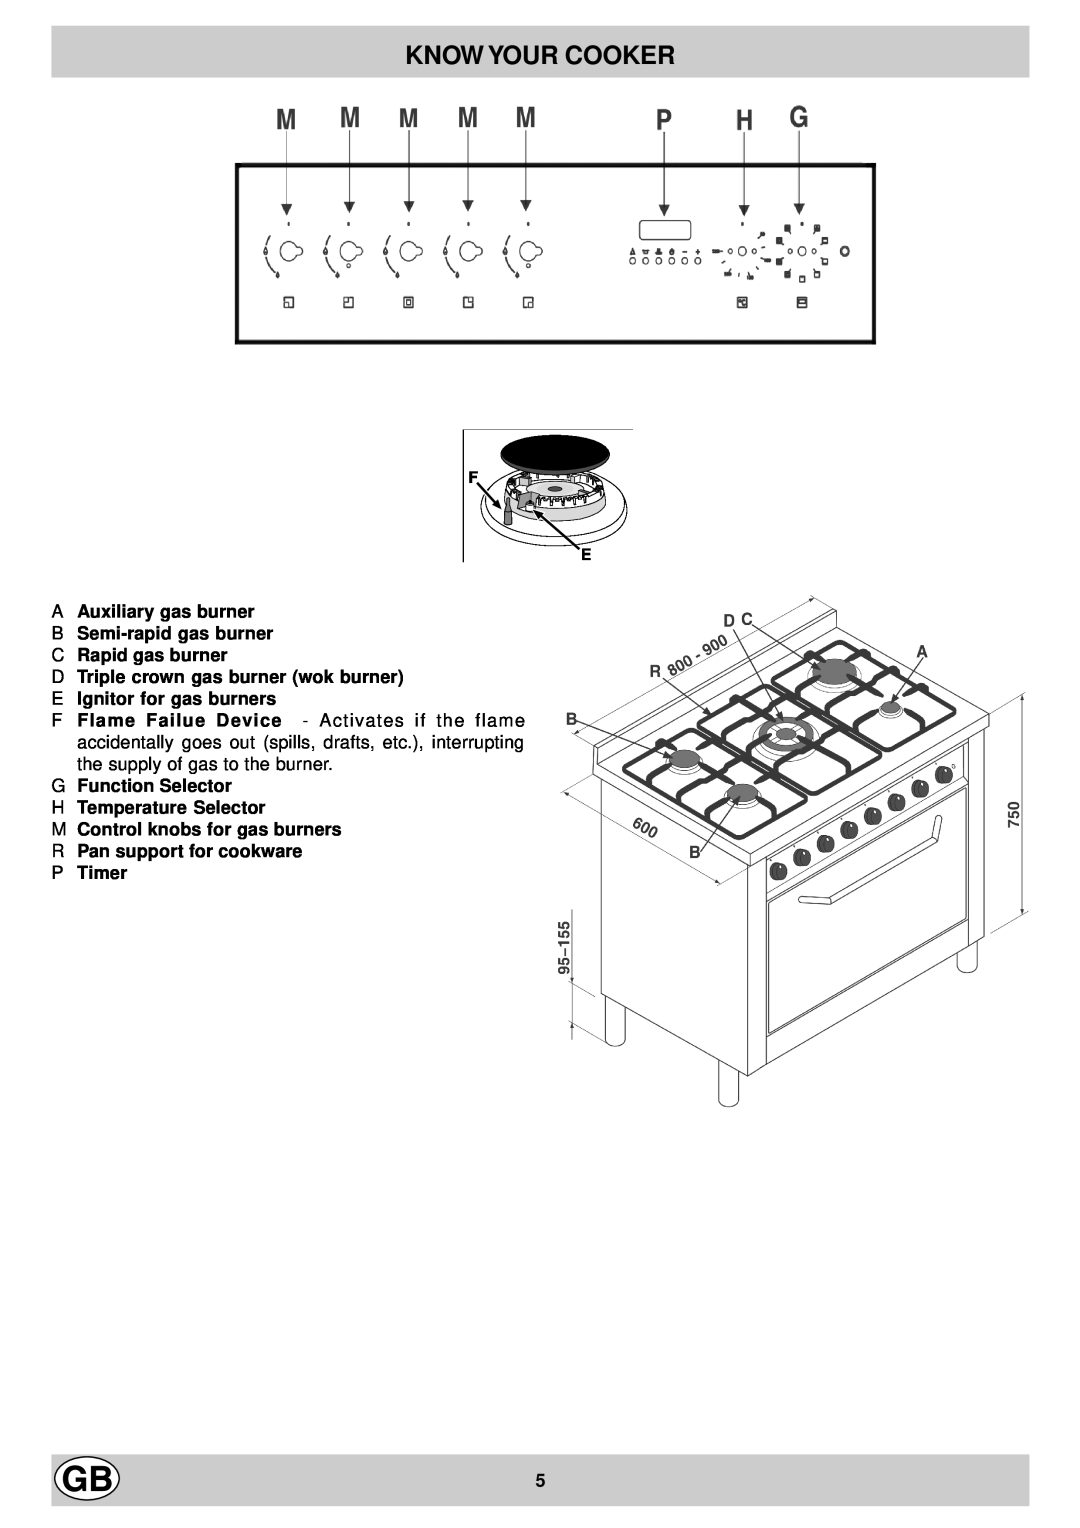 Hotpoint EG900X manual Know Your Cooker, A Auxiliary gas burner B Semi-rapid gas burner C Rapid gas burner 